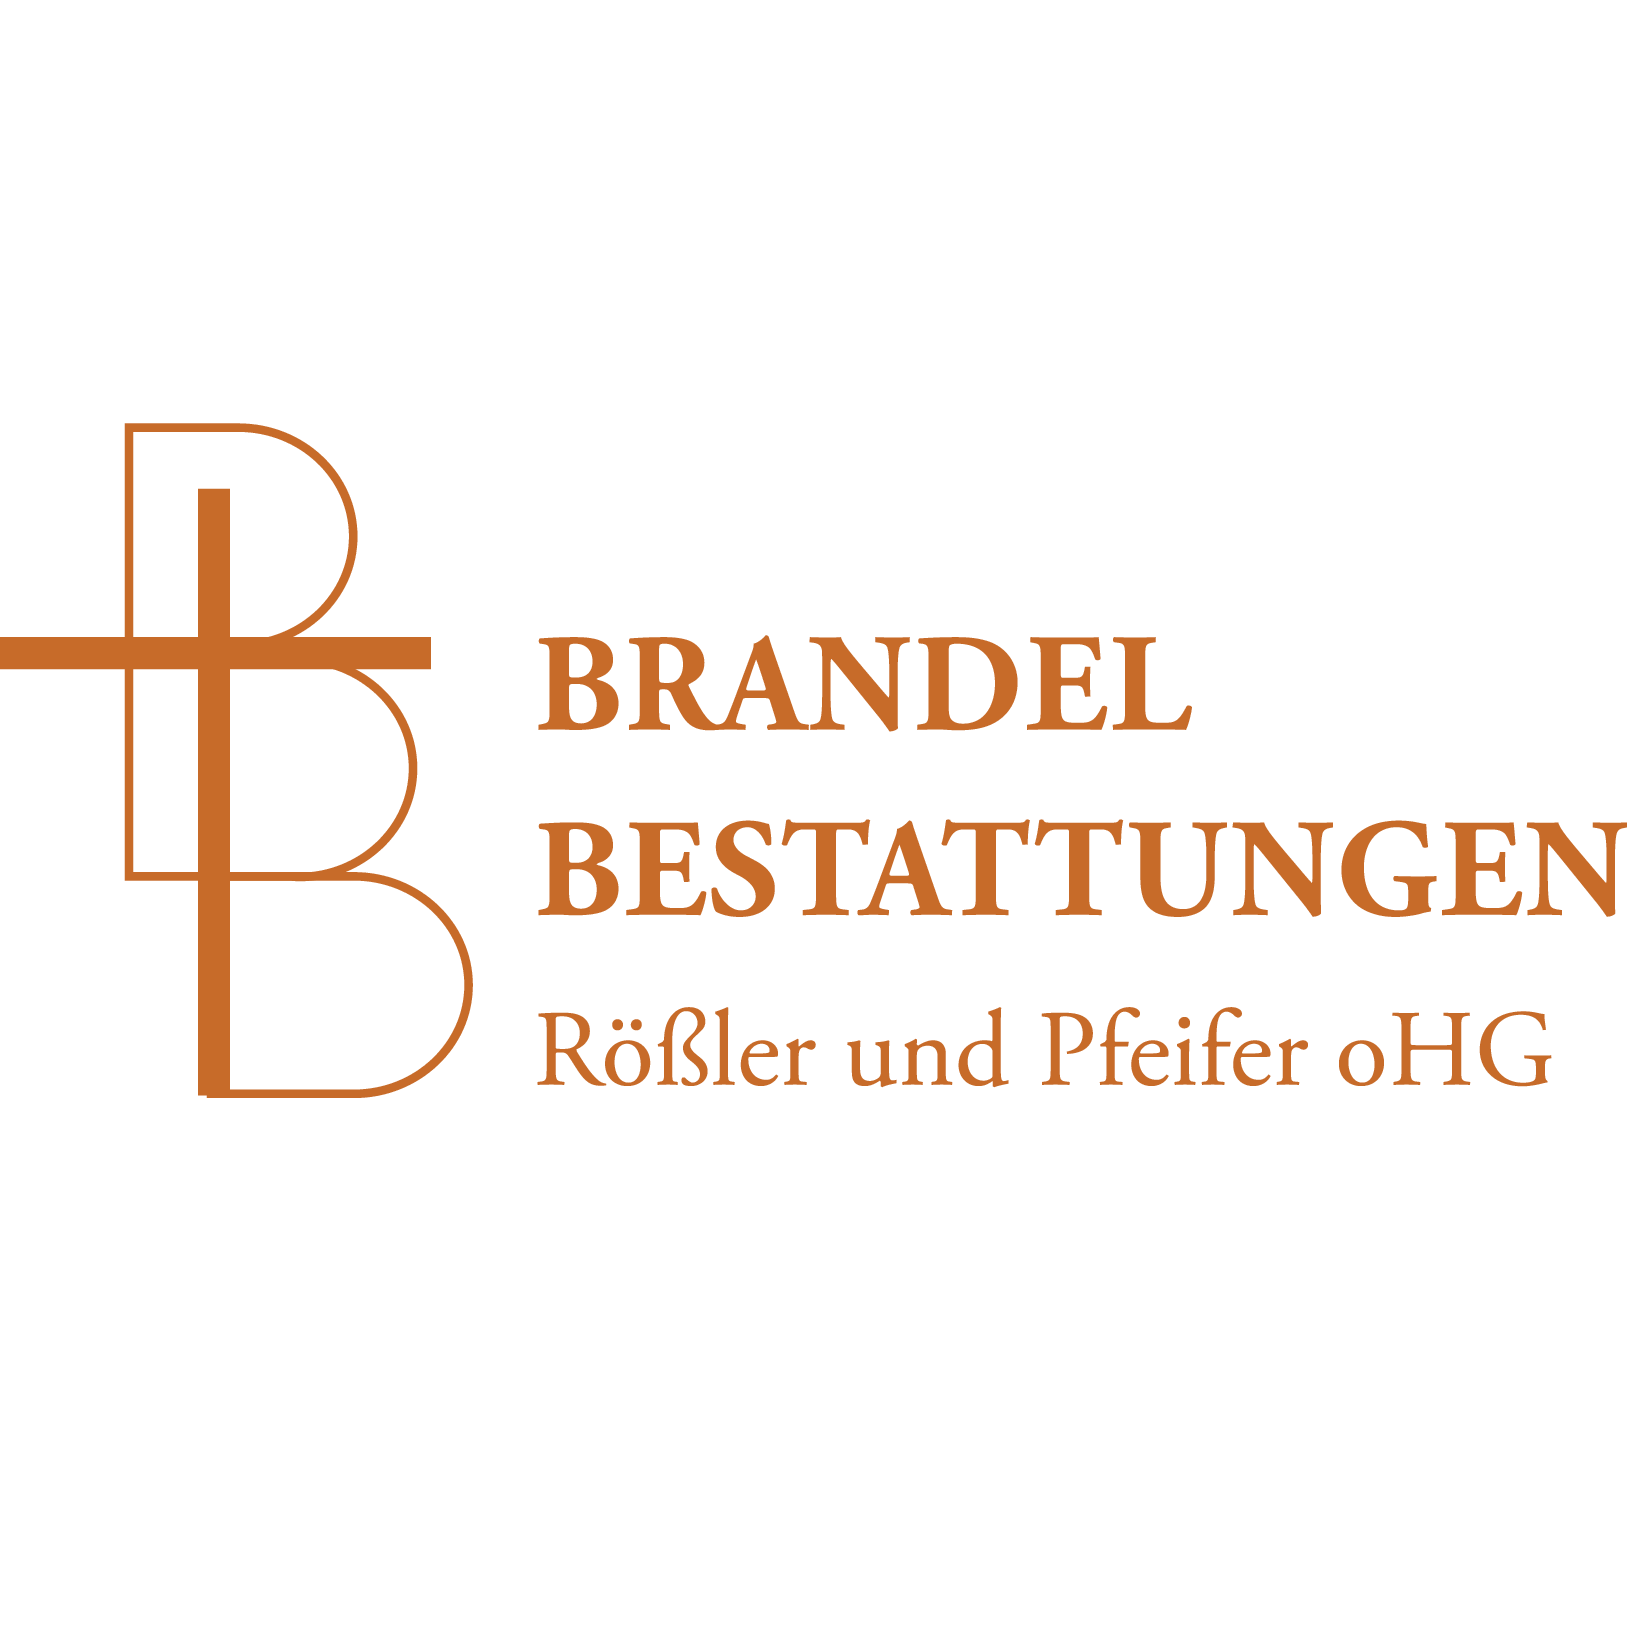 Brandel BestattungenBrandel Bestattungen Rößler und Pfeifer oHG in Berlin - Logo